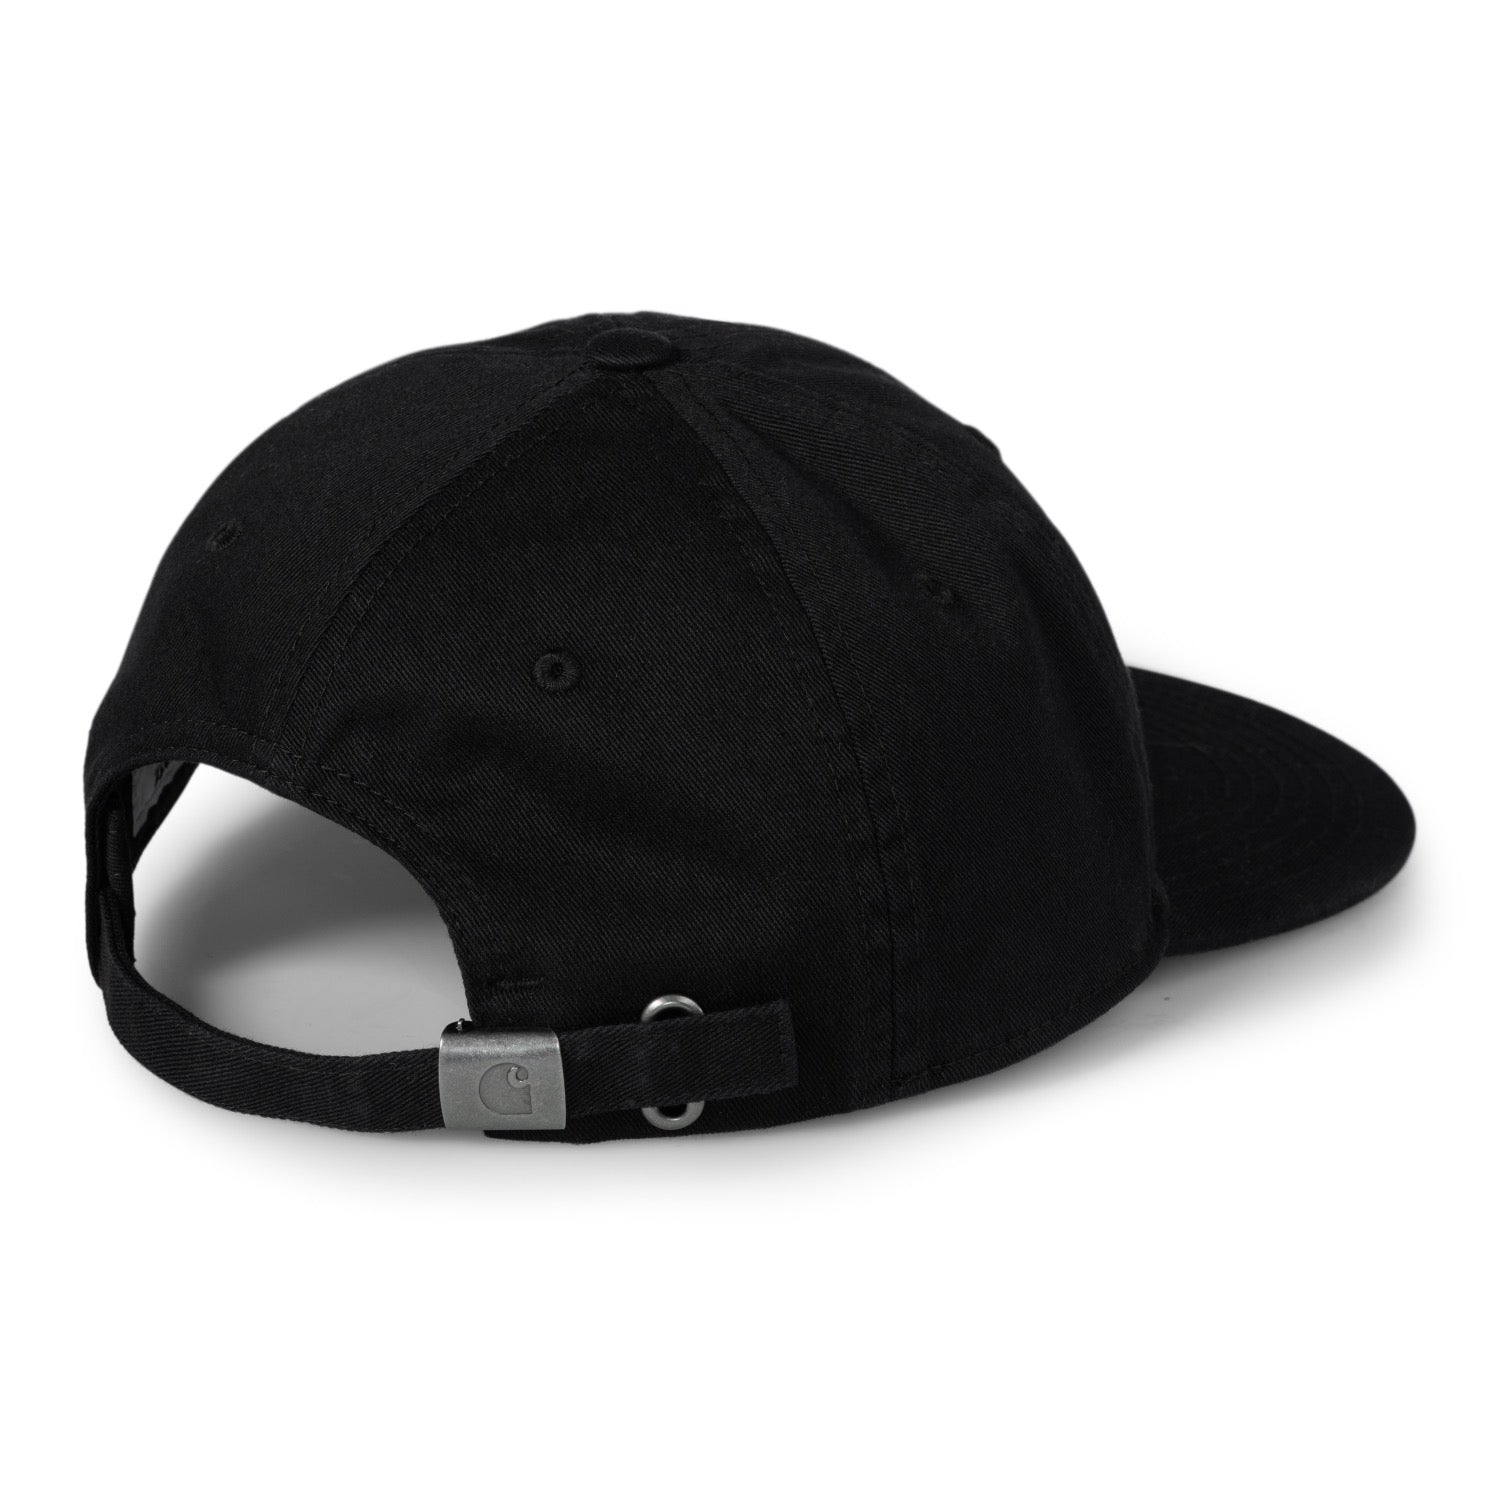 ONYX CAP - Black / White